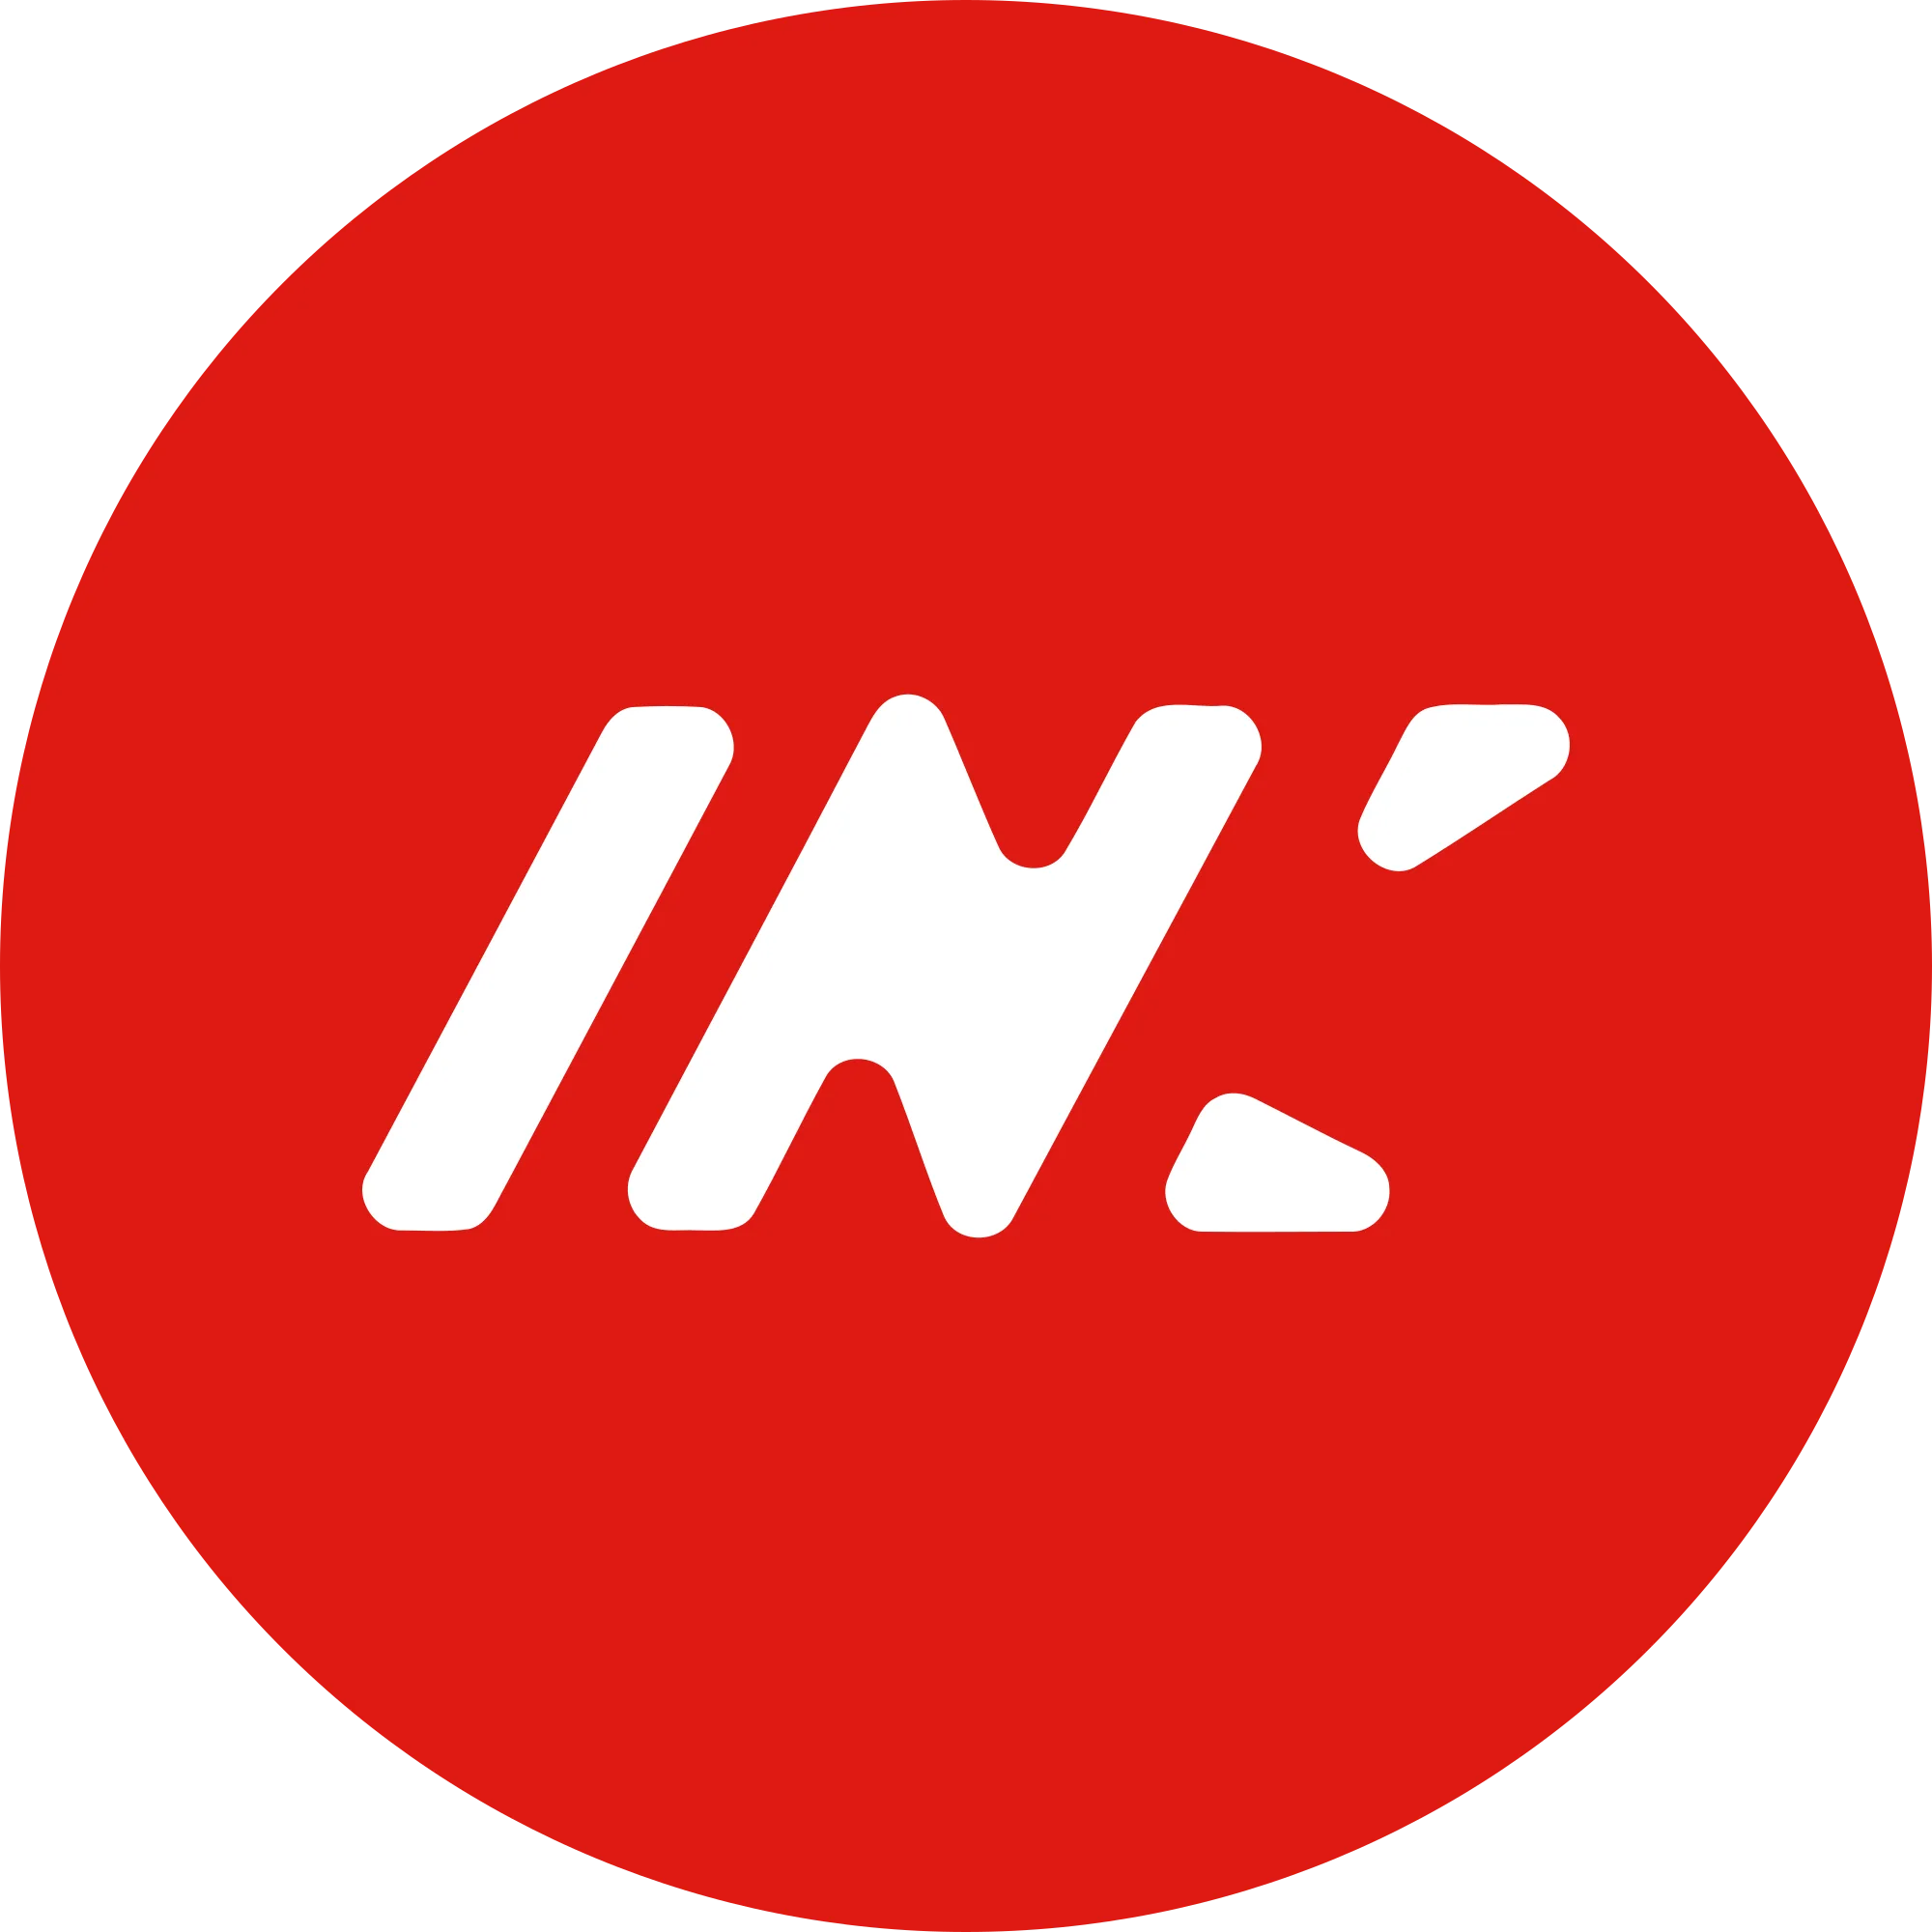 Ink logo in png format